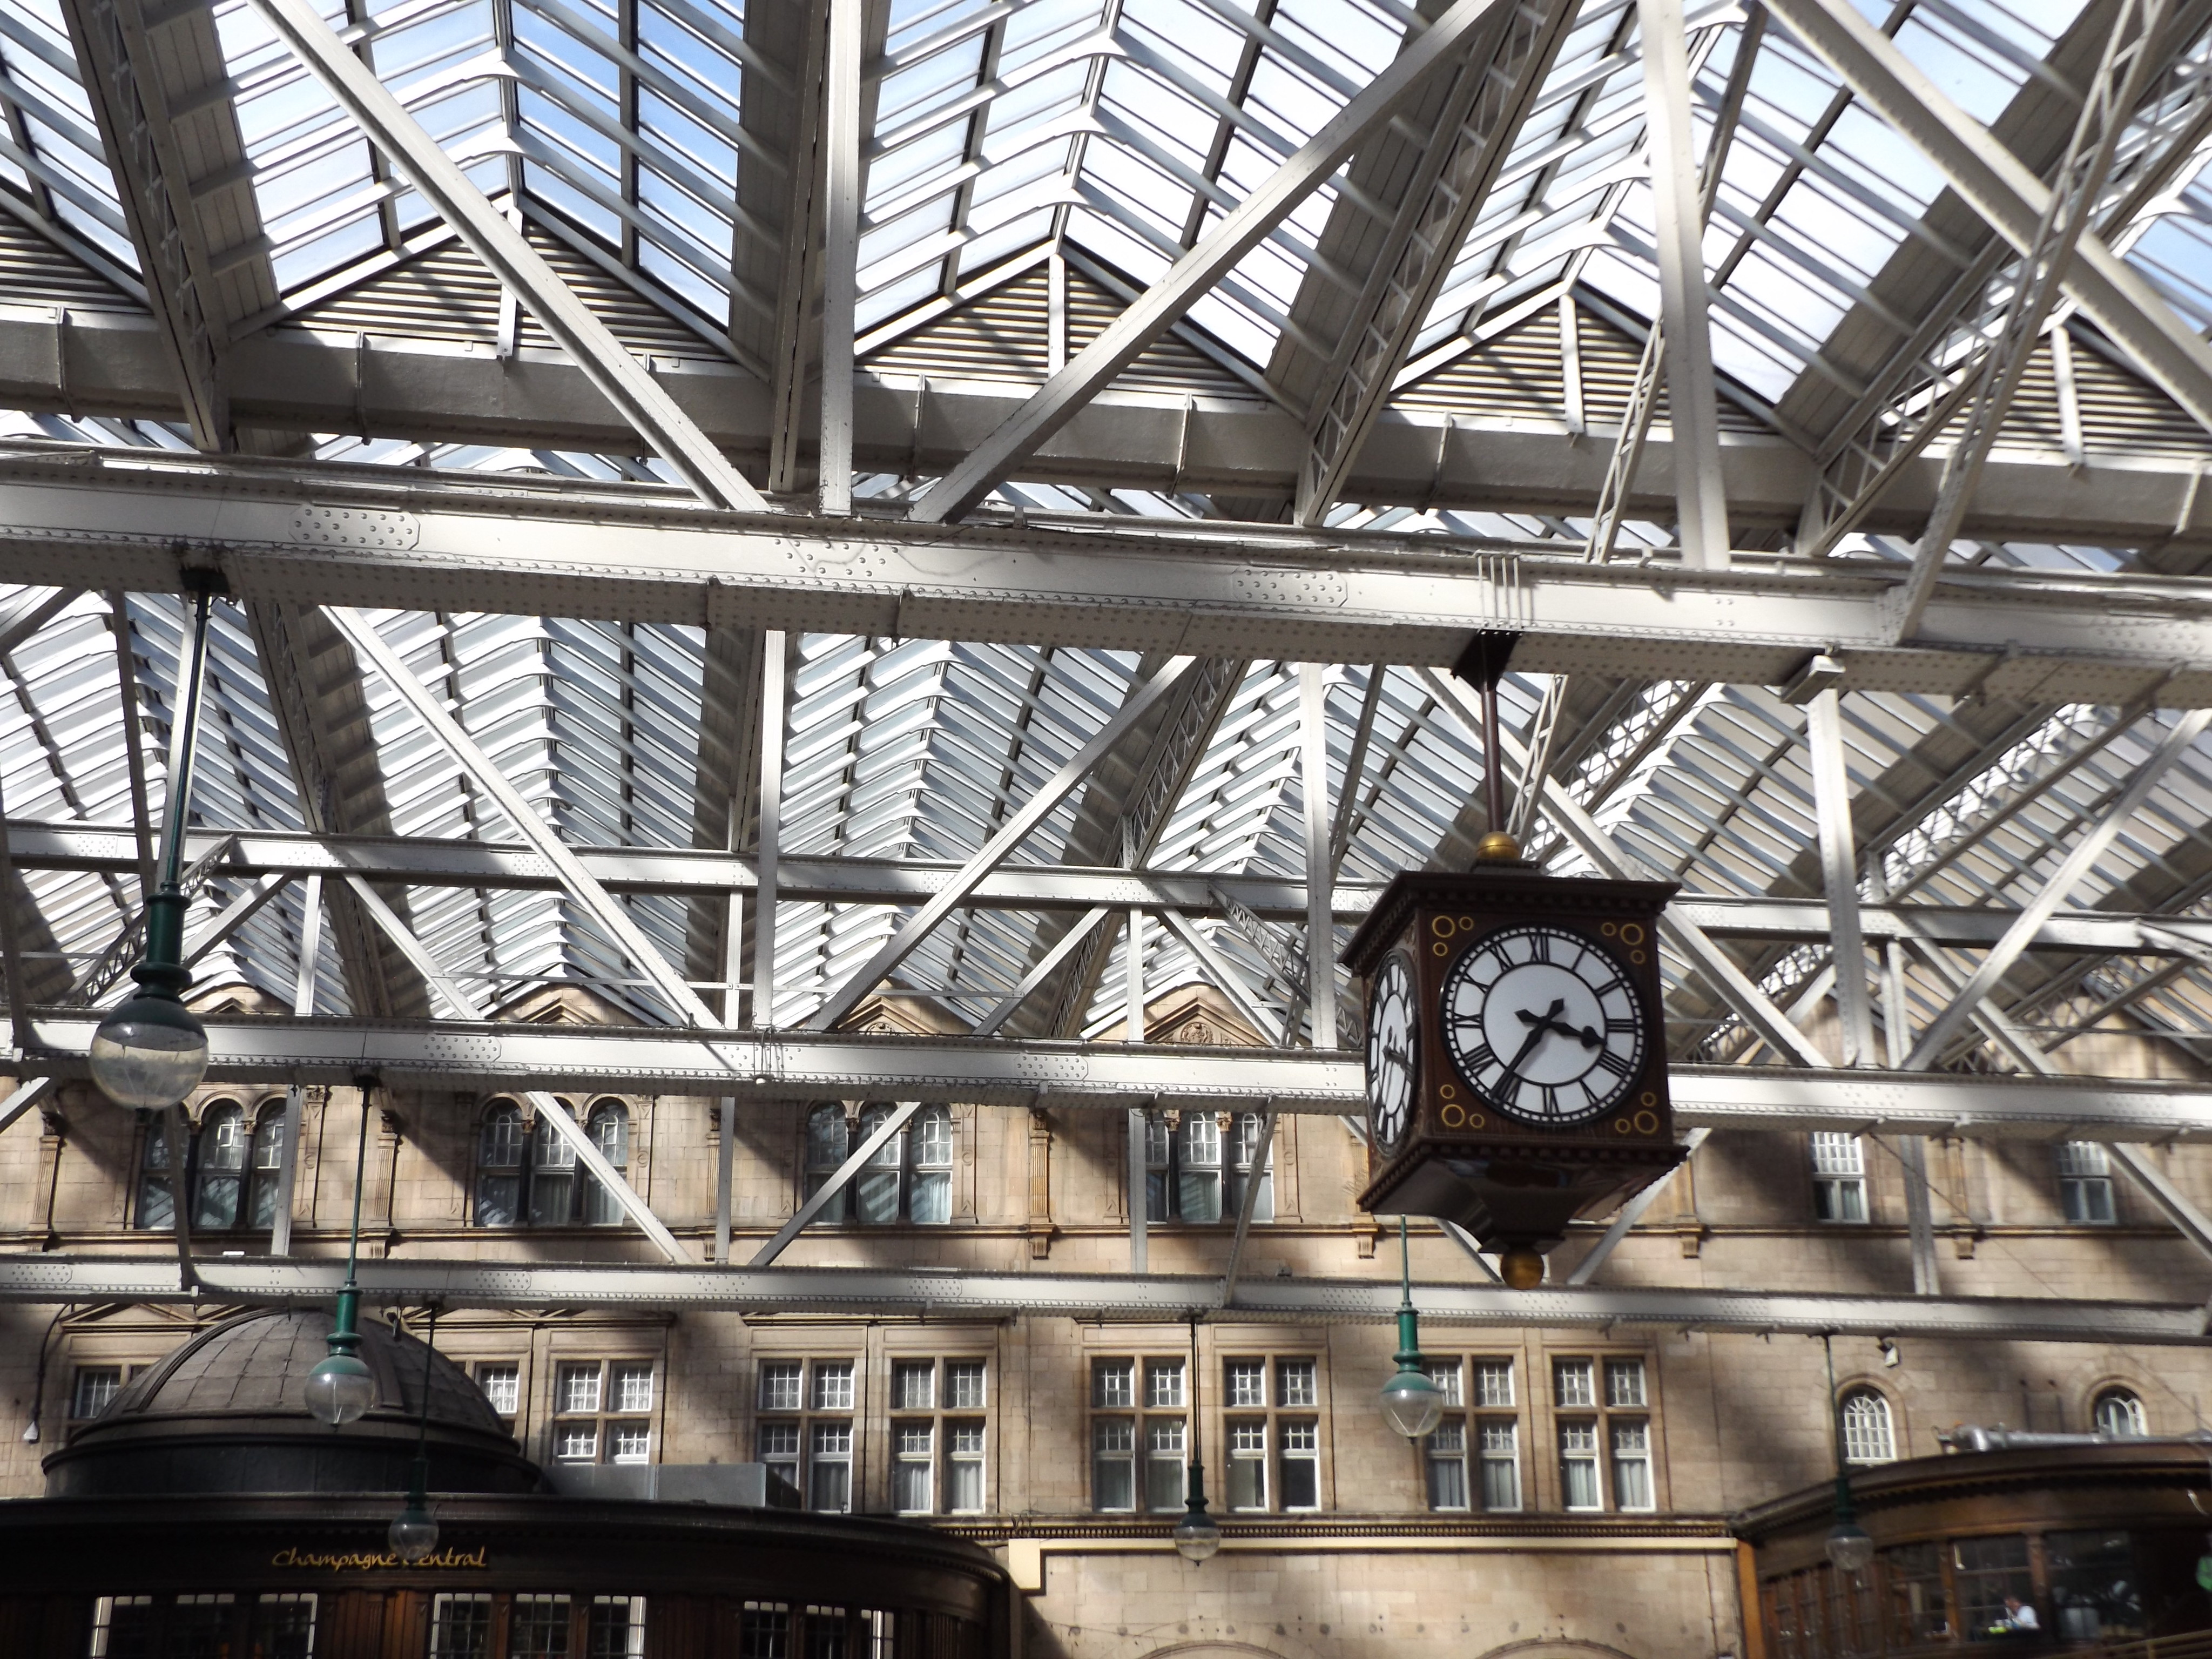 Clock in Central Station, Glasgow, 5 April 2018